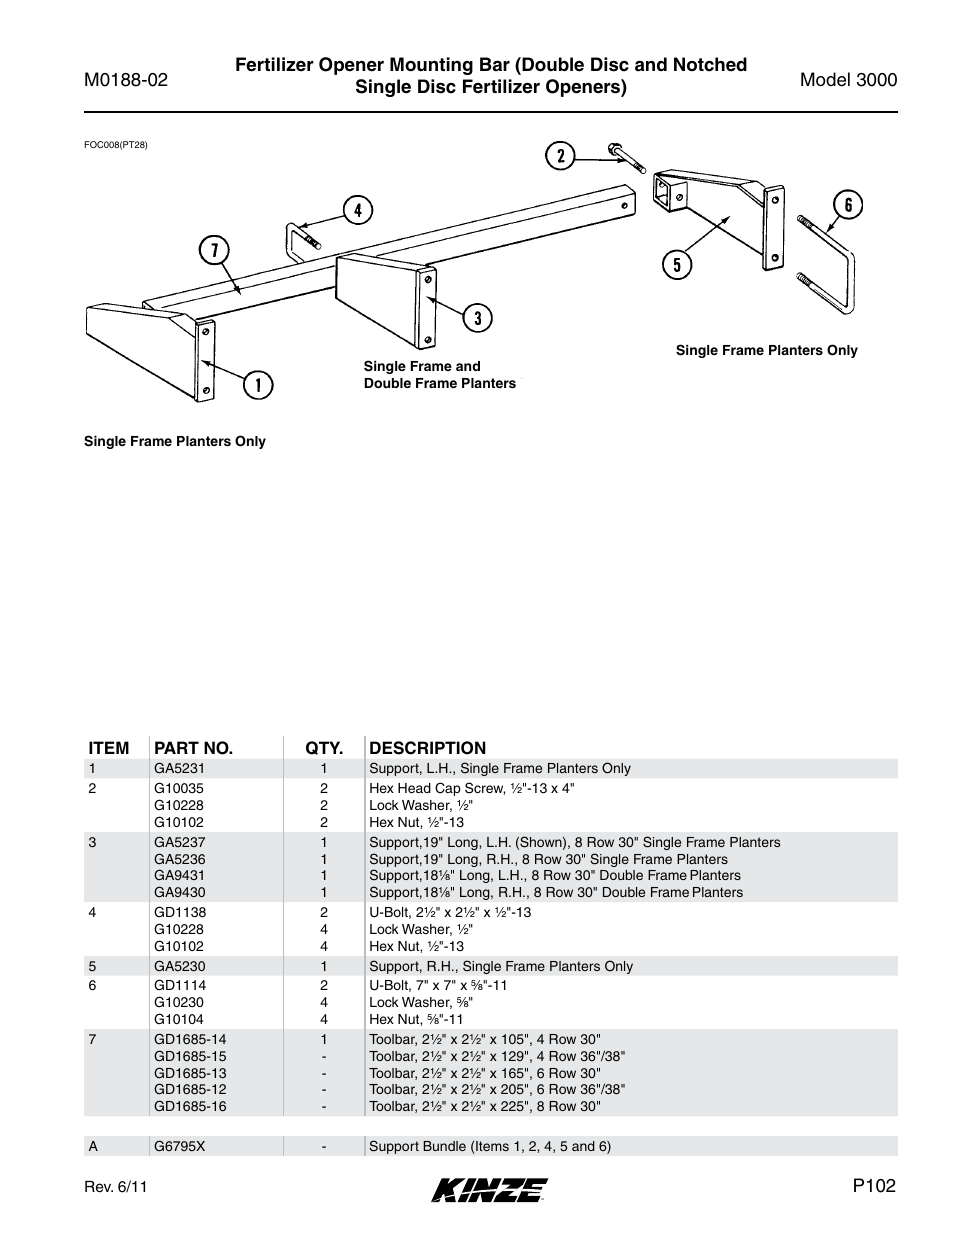 P102 | Kinze 3000 Rigid Frame Planter Rev. 5/14 User Manual | Page 105 / 154